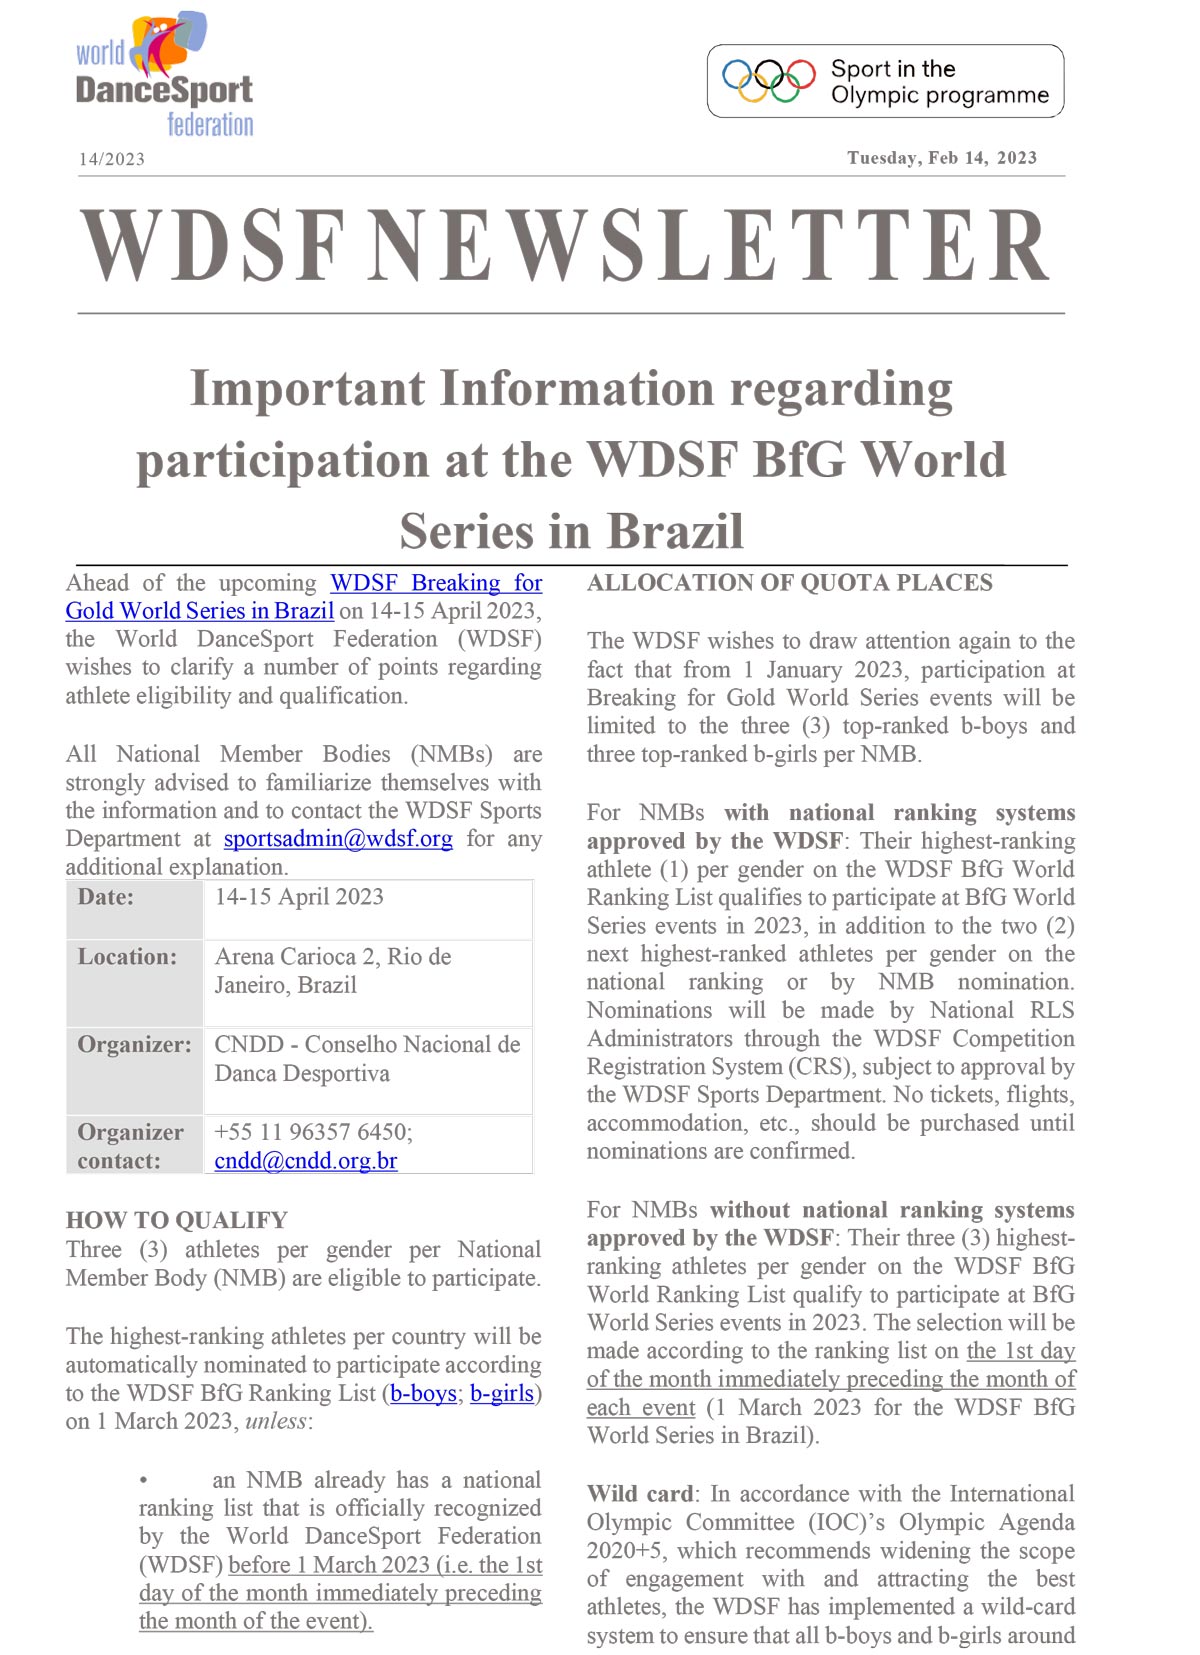 WDSF Newsletter BFG World Series in Brazil pic 1